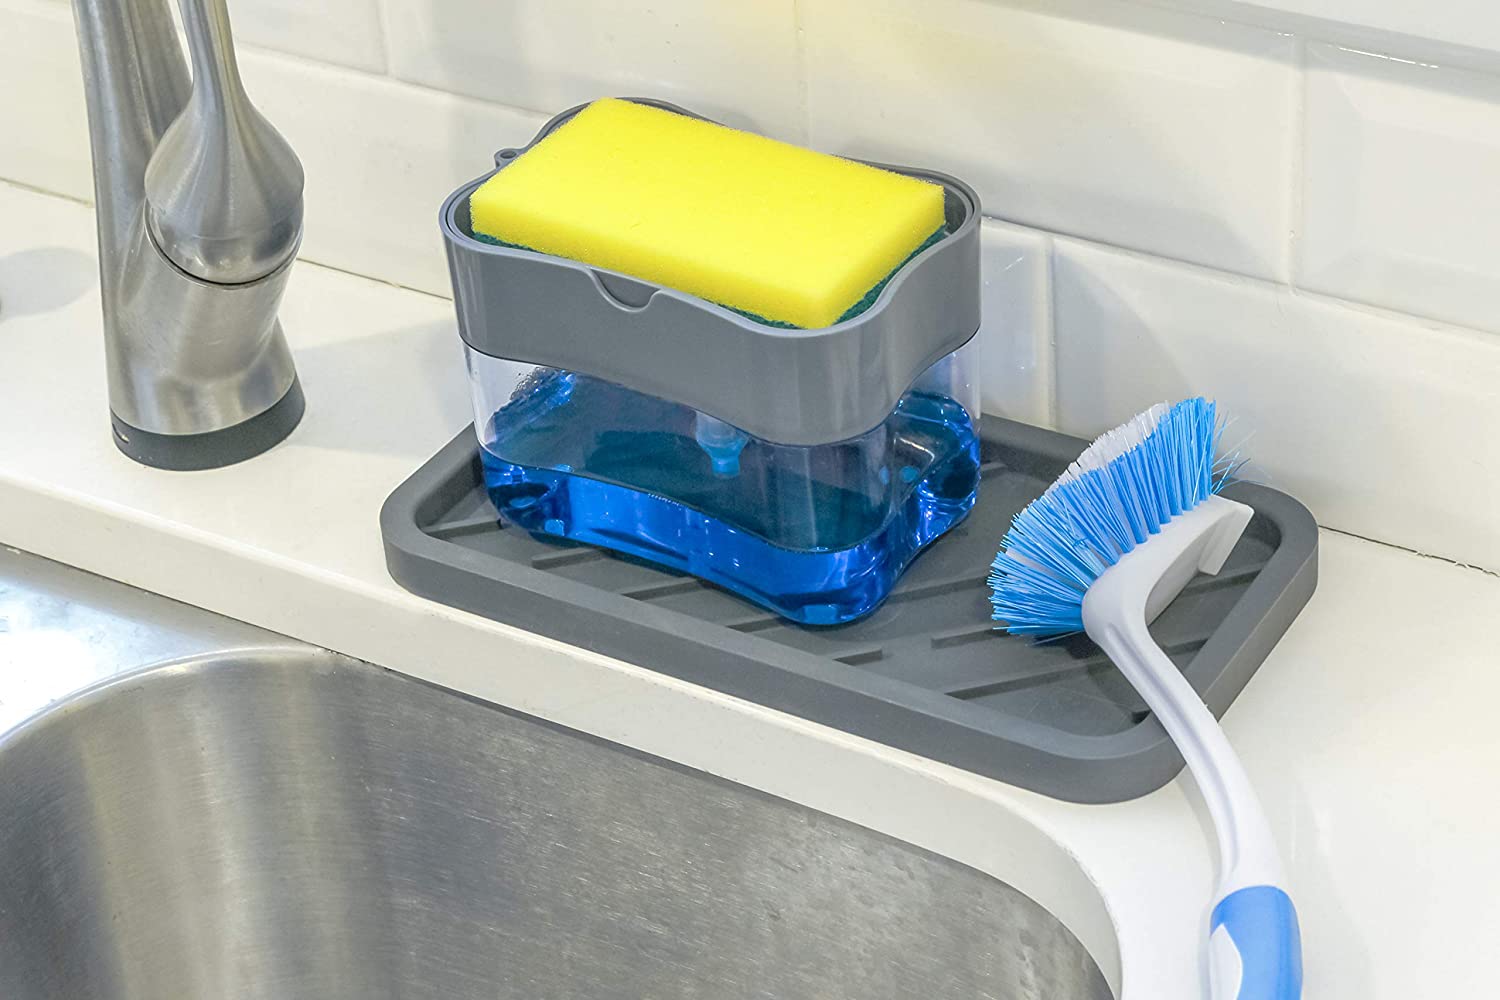 ROXTAK Soap Pump Dispenser and Sponge Dish Sponge Holder Kitchen Sink Dish Washing Soap Dispenser 13 Ounces